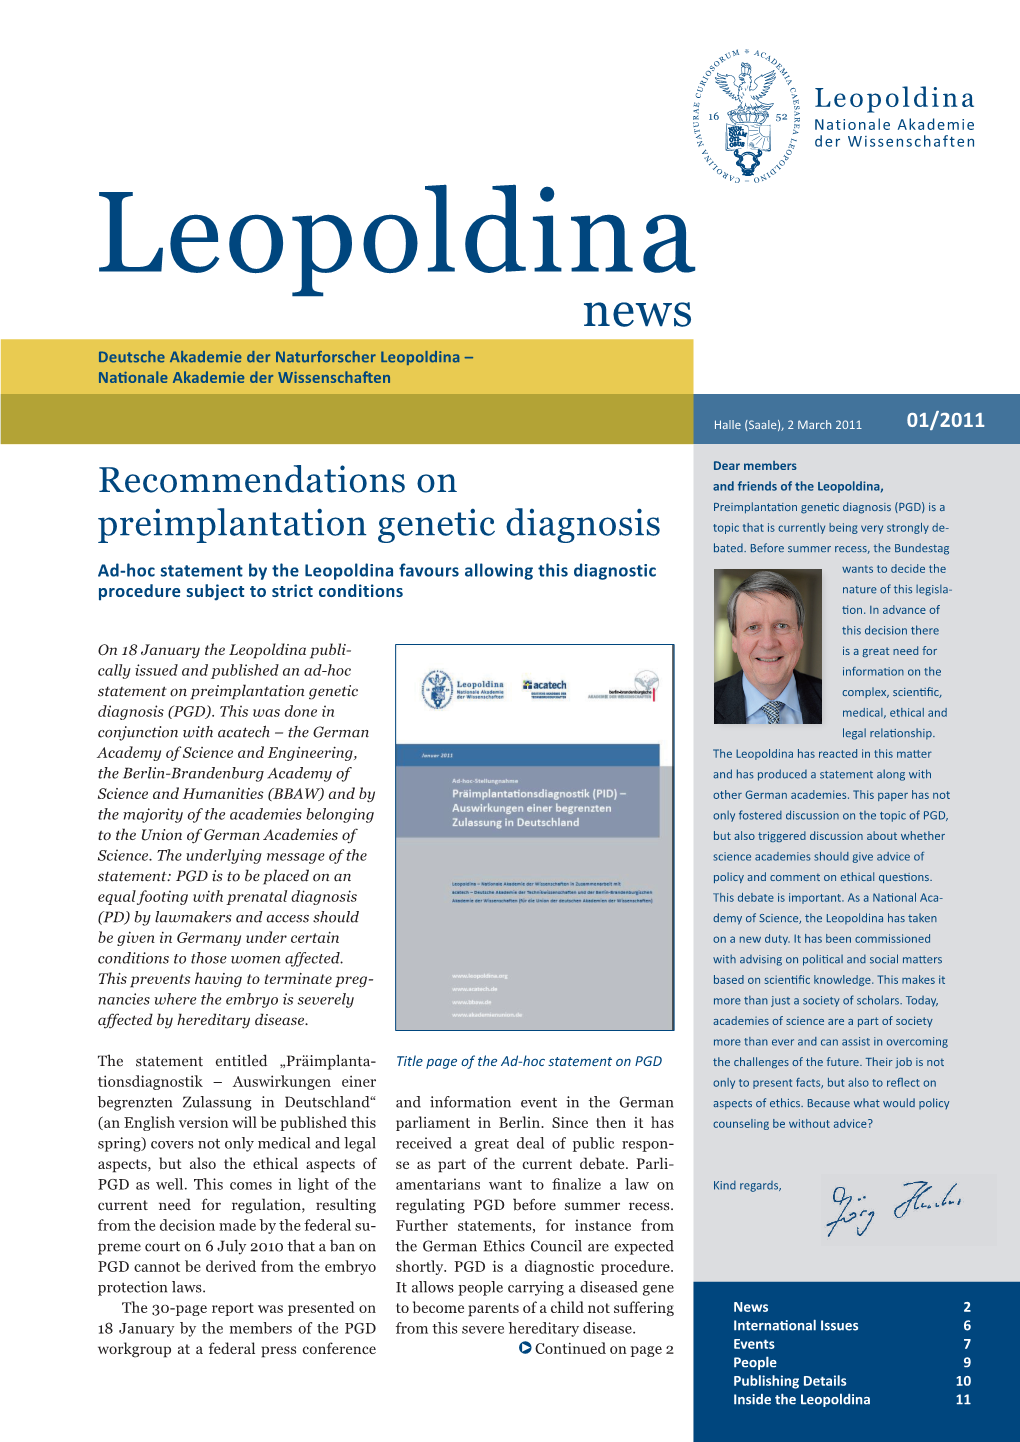 Leopoldina News 01/2011 English